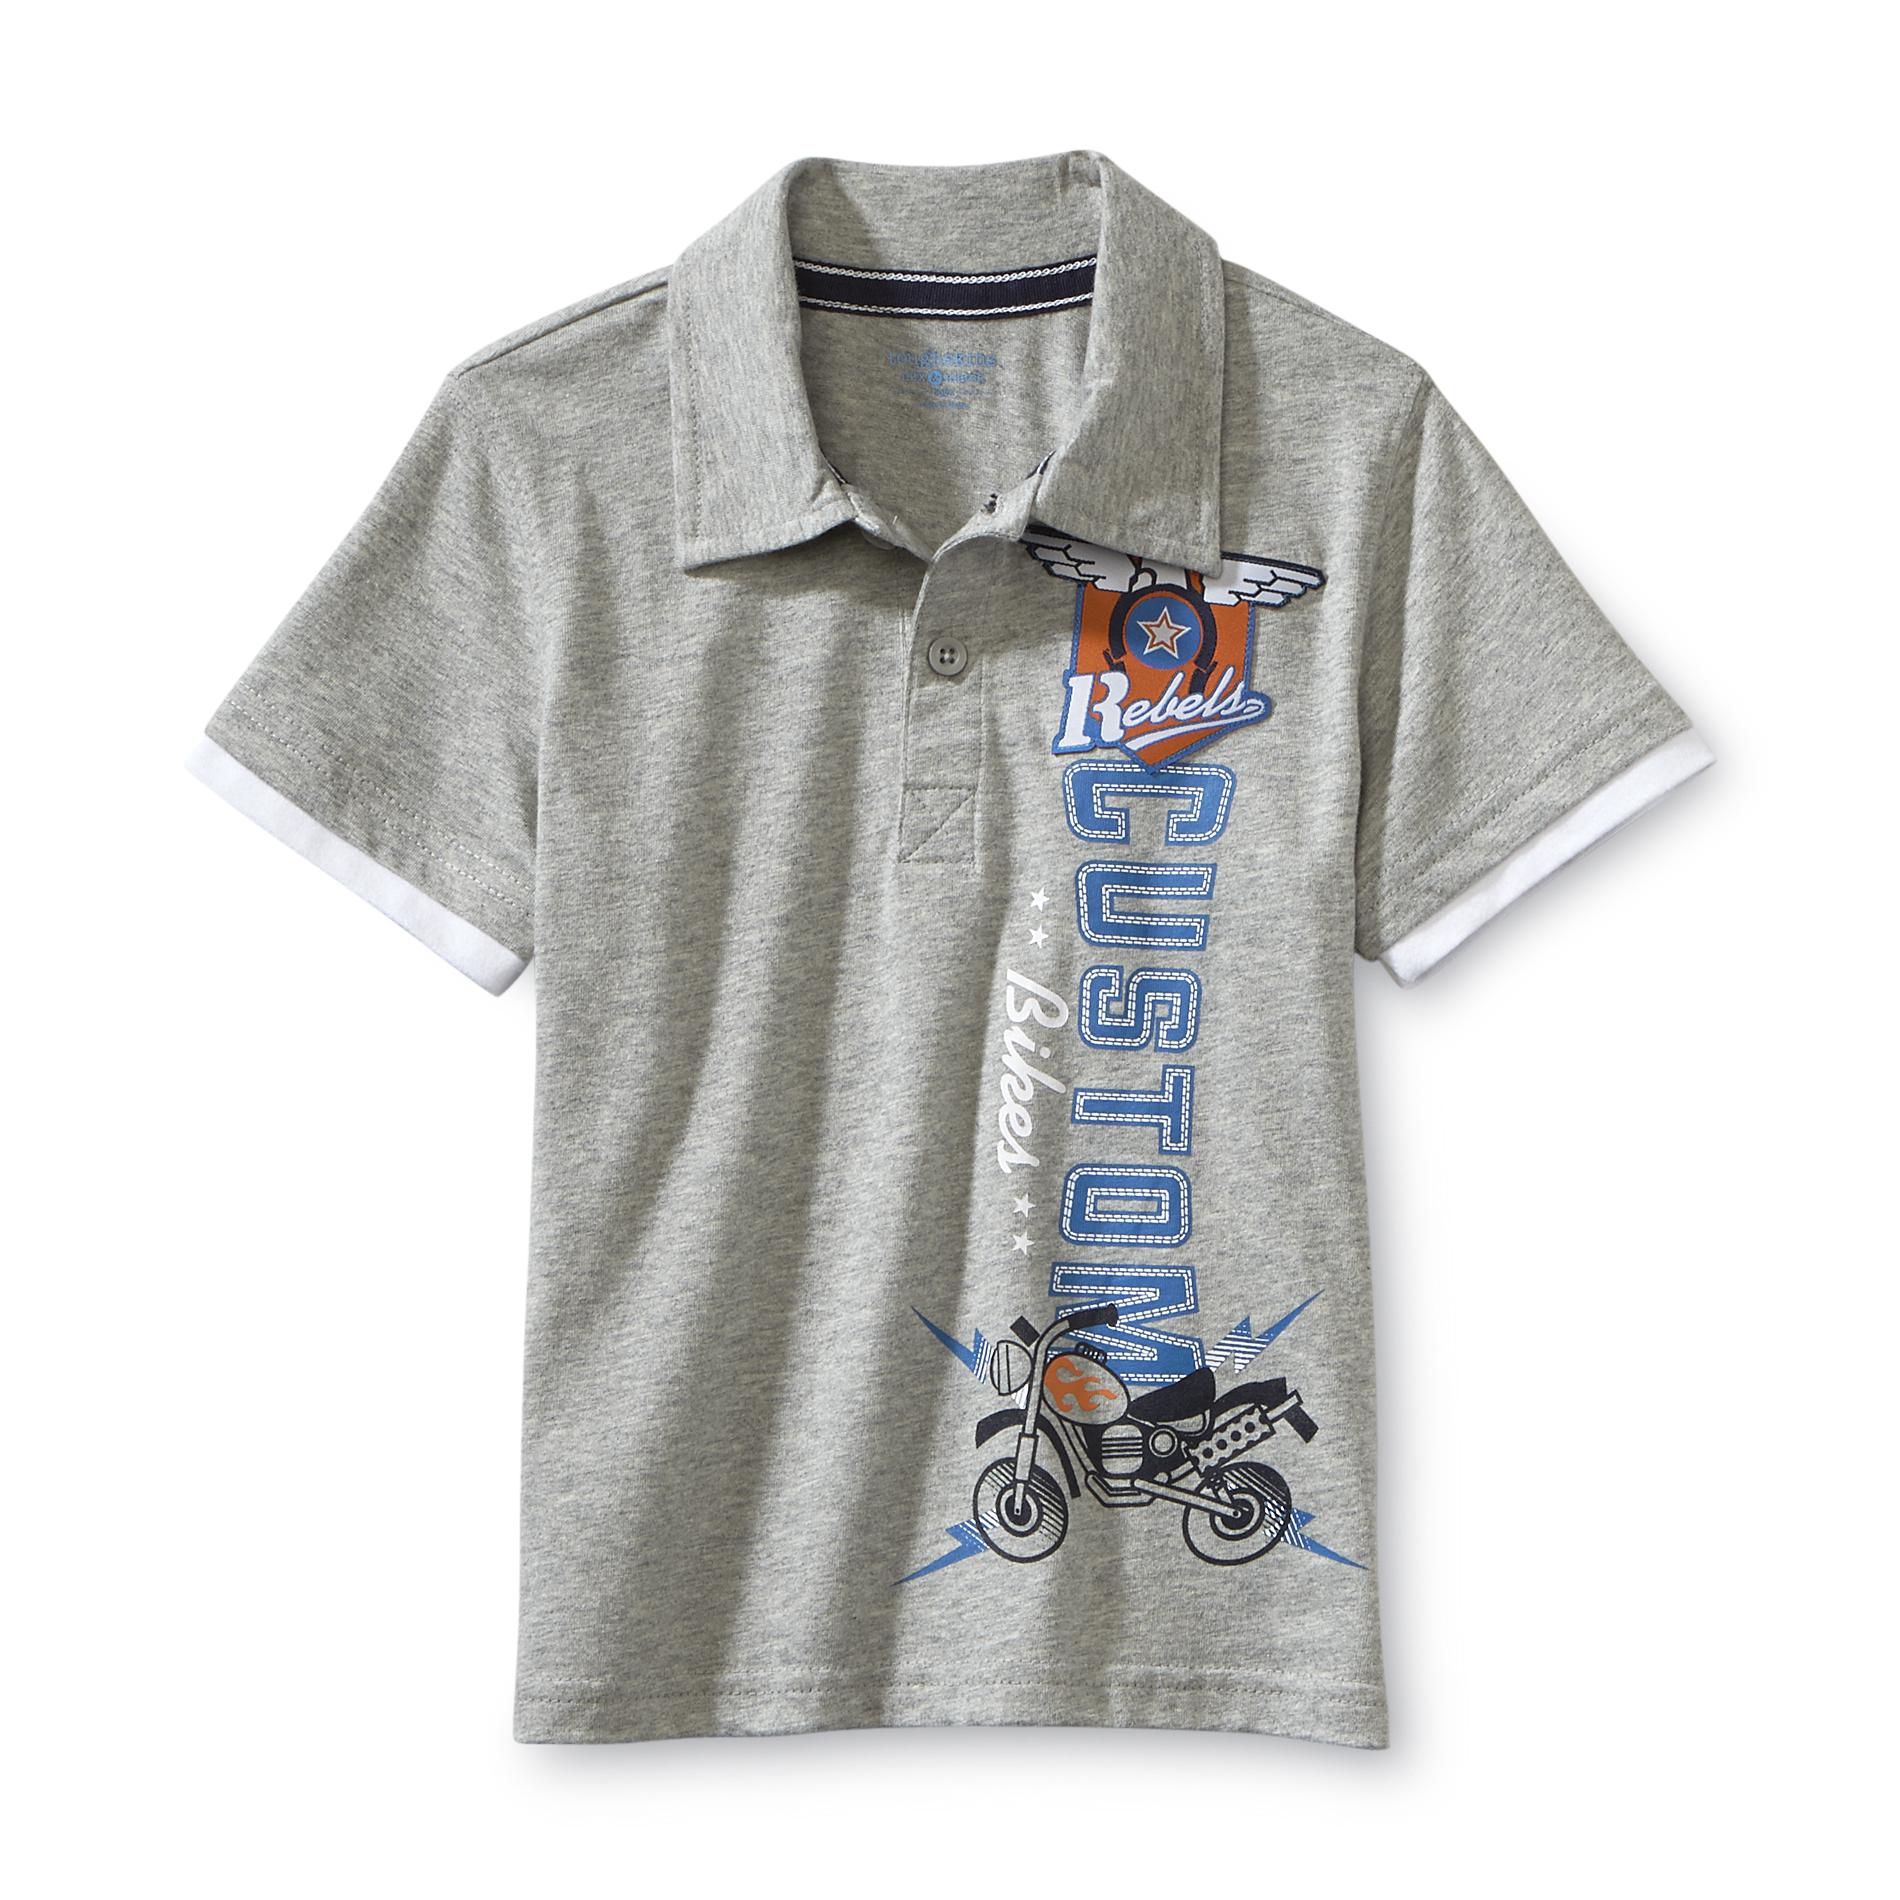 Toughskins Infant & Toddler Boy's Polo Shirt - Rebels Custom Bikes